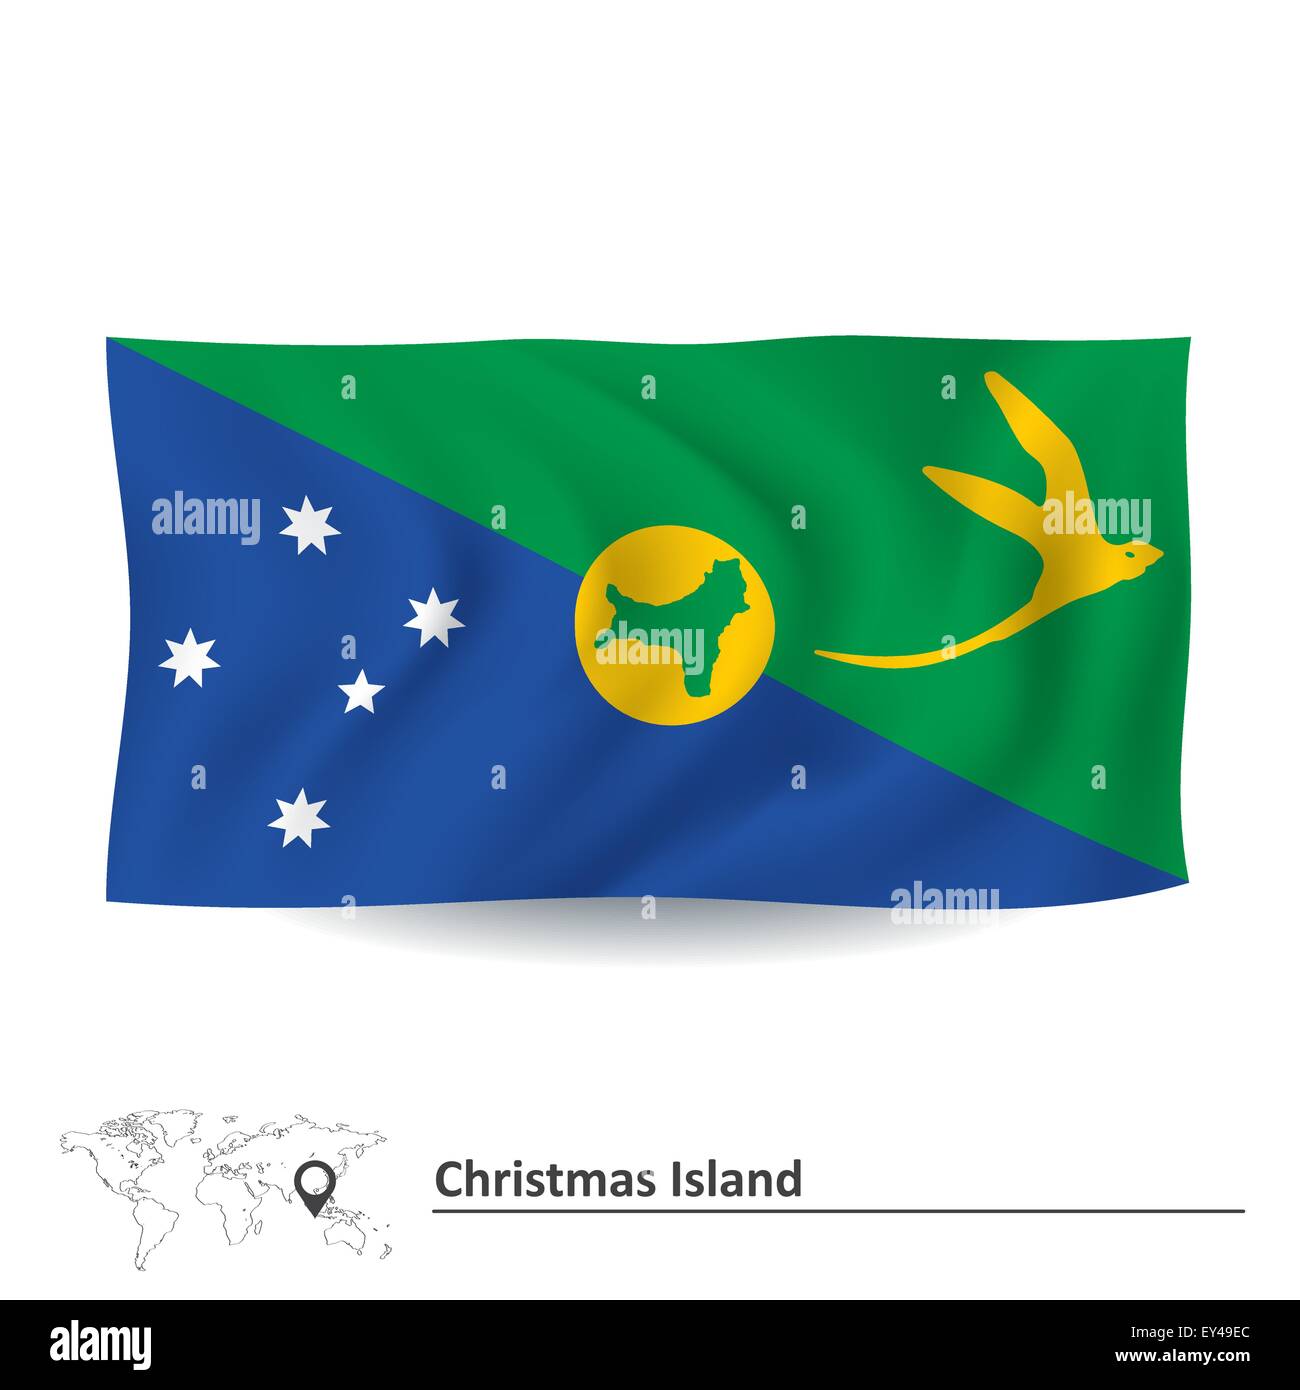 Flag of Christmas Island - vector illustration Stock Vector